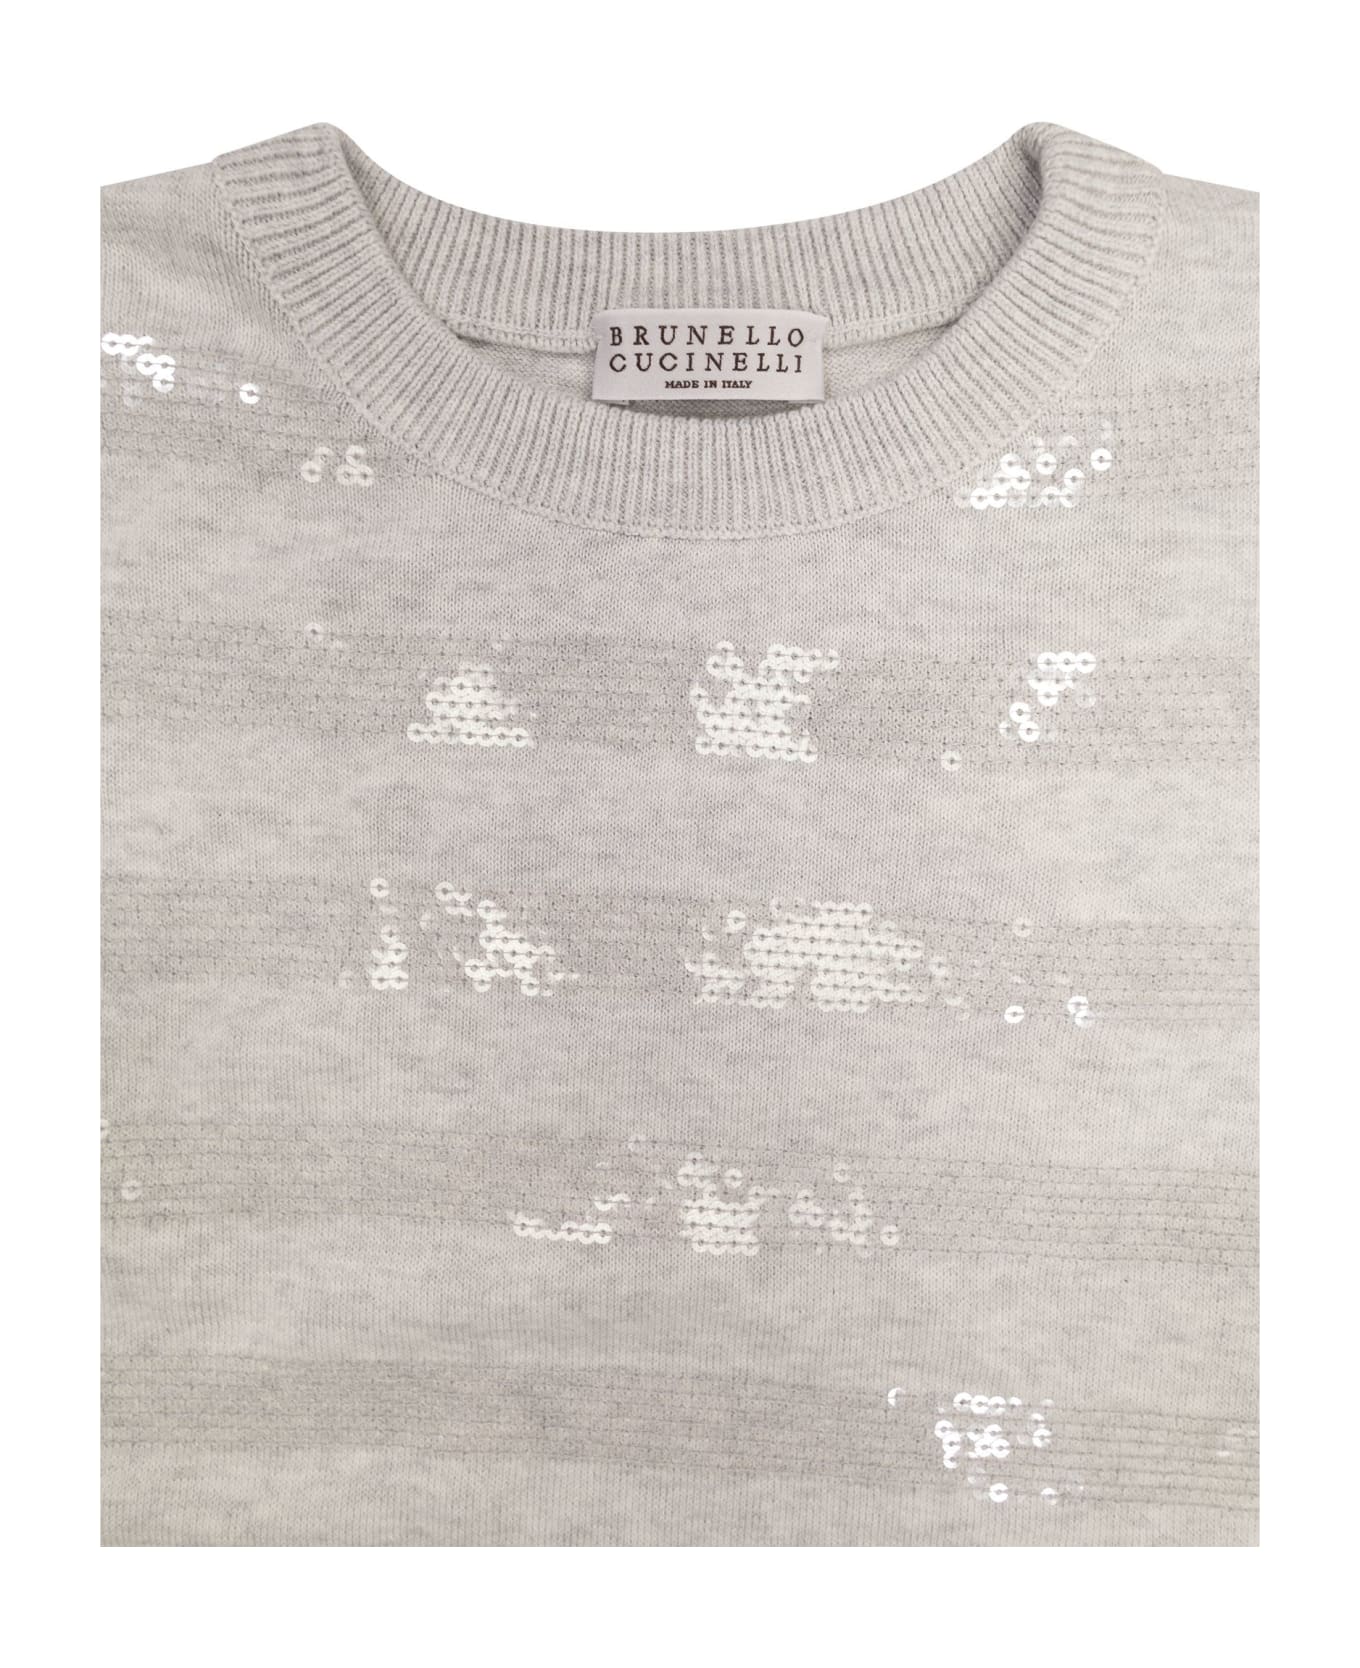 Brunello Cucinelli Cotton Jersey With Sparkling Stripes - Grey